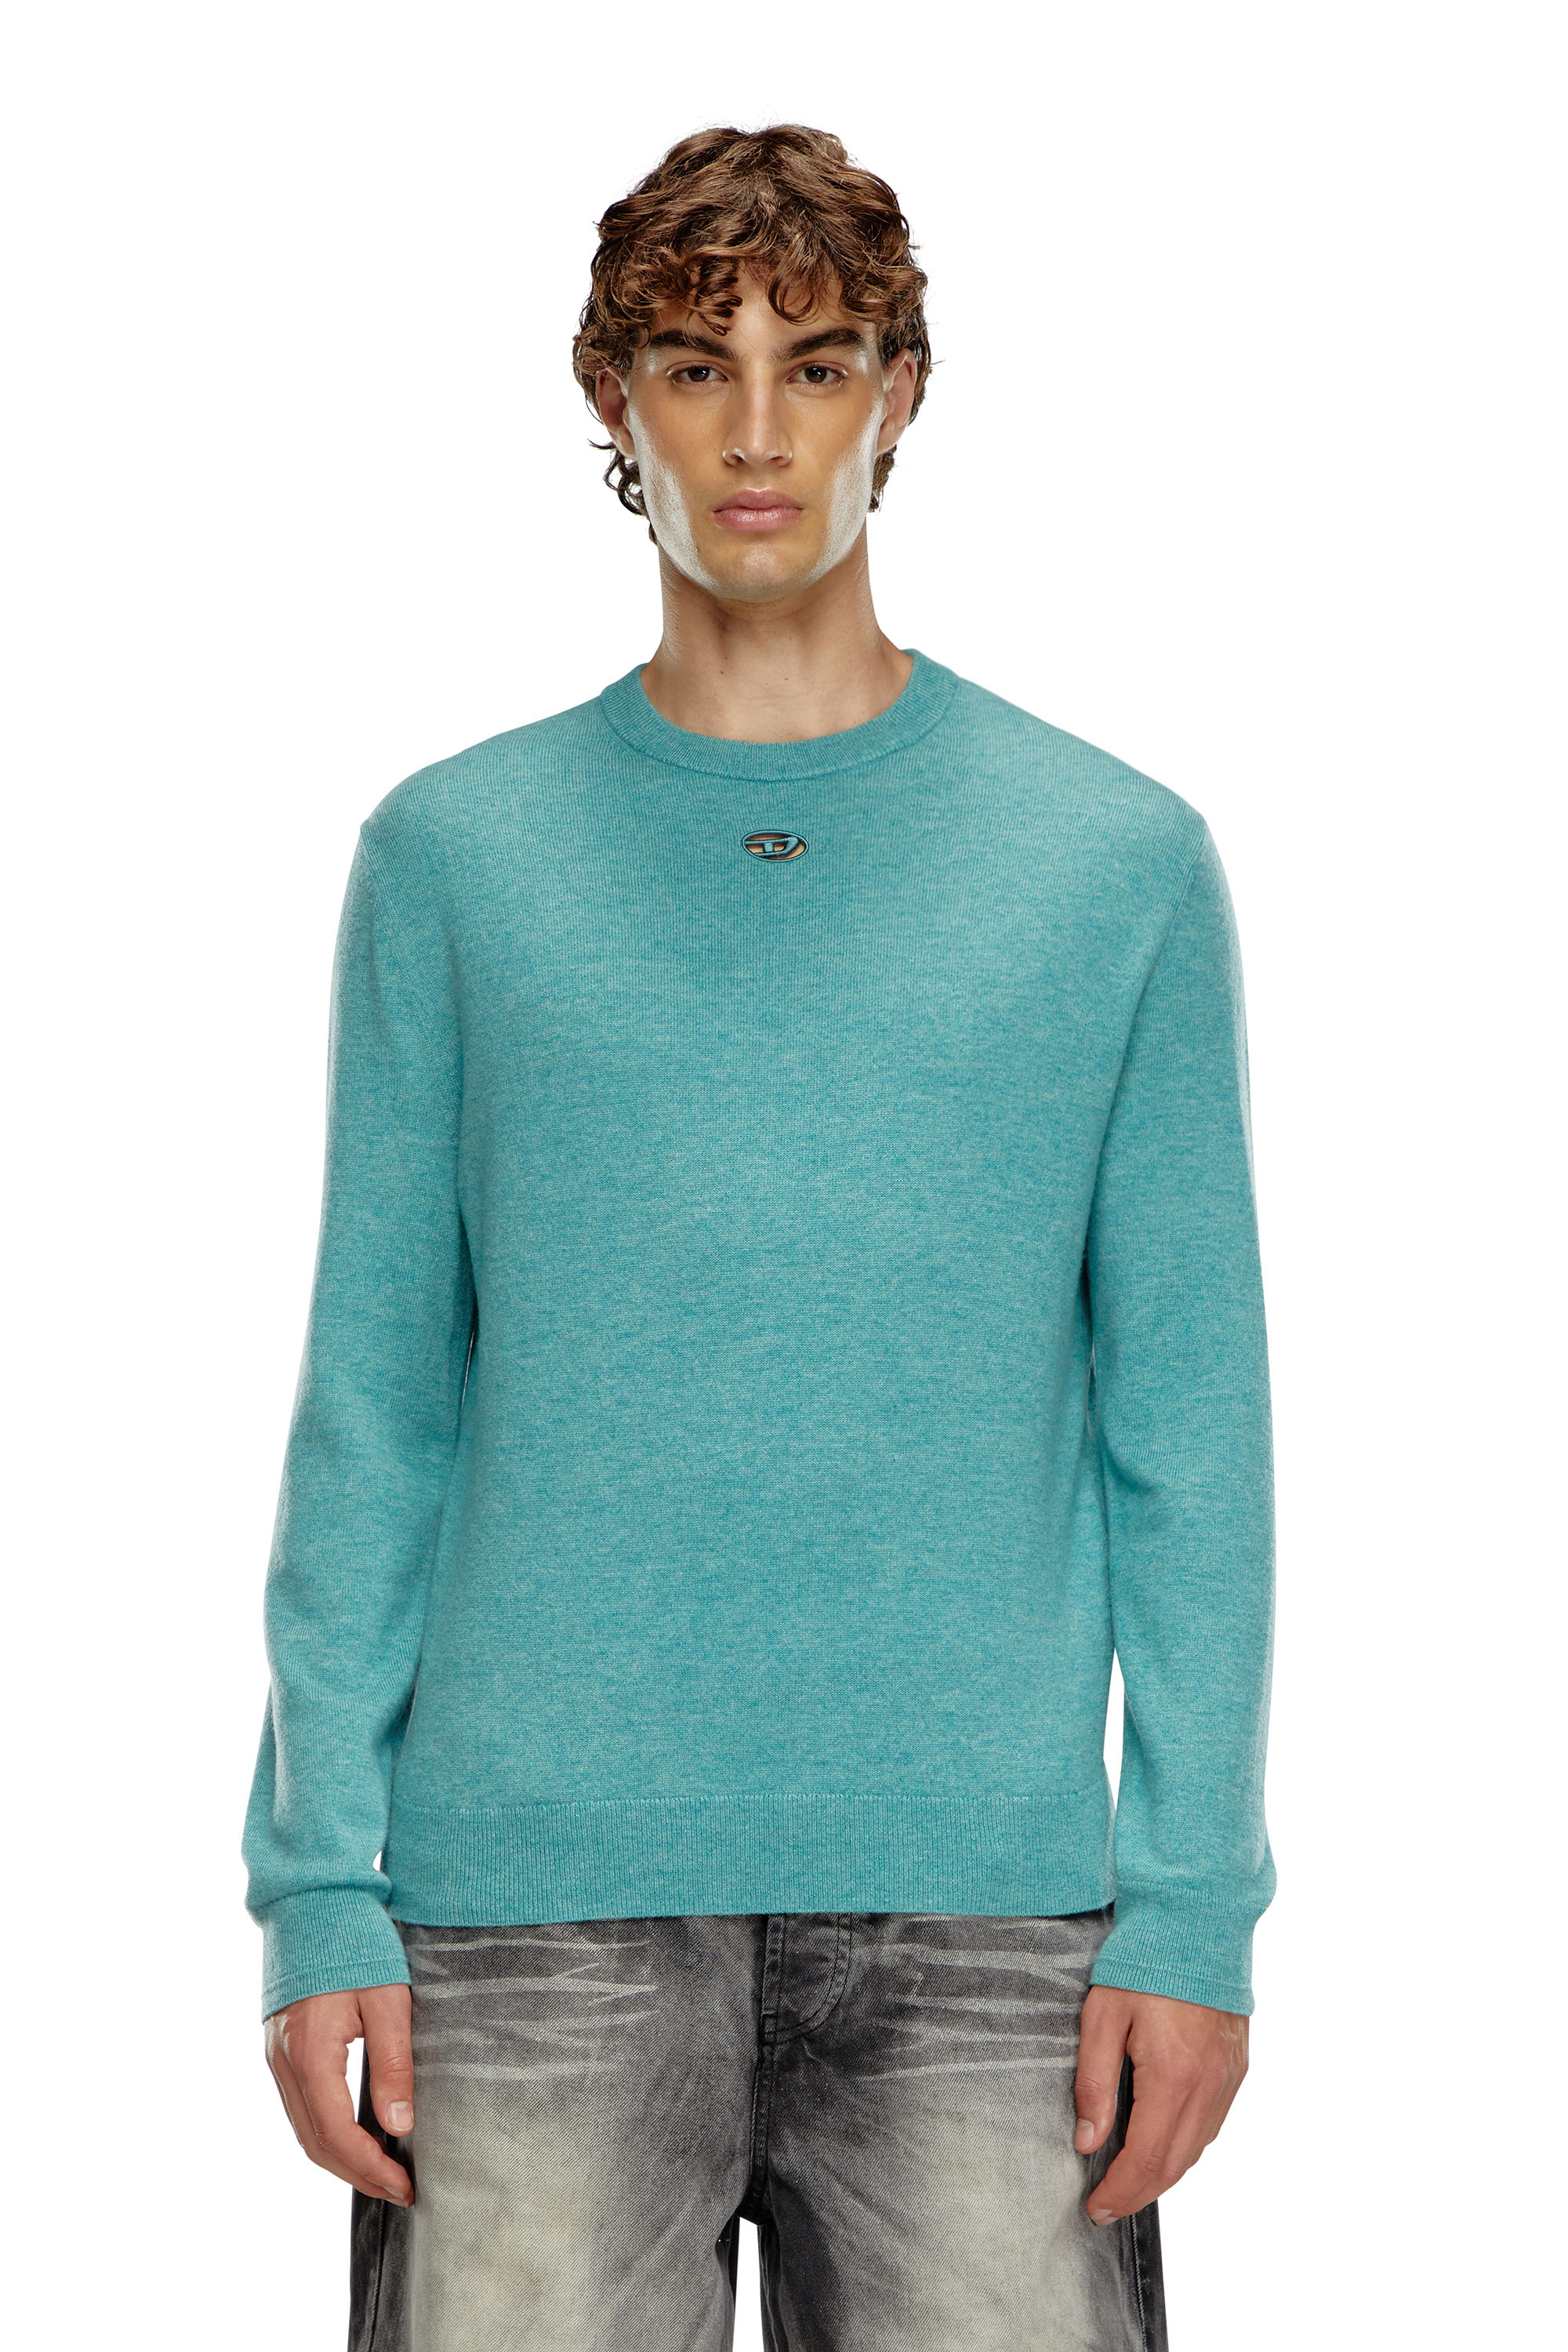 Diesel - K-VIERI, Hombre Jersey de lana y cachemira in Azul marino - Image 1